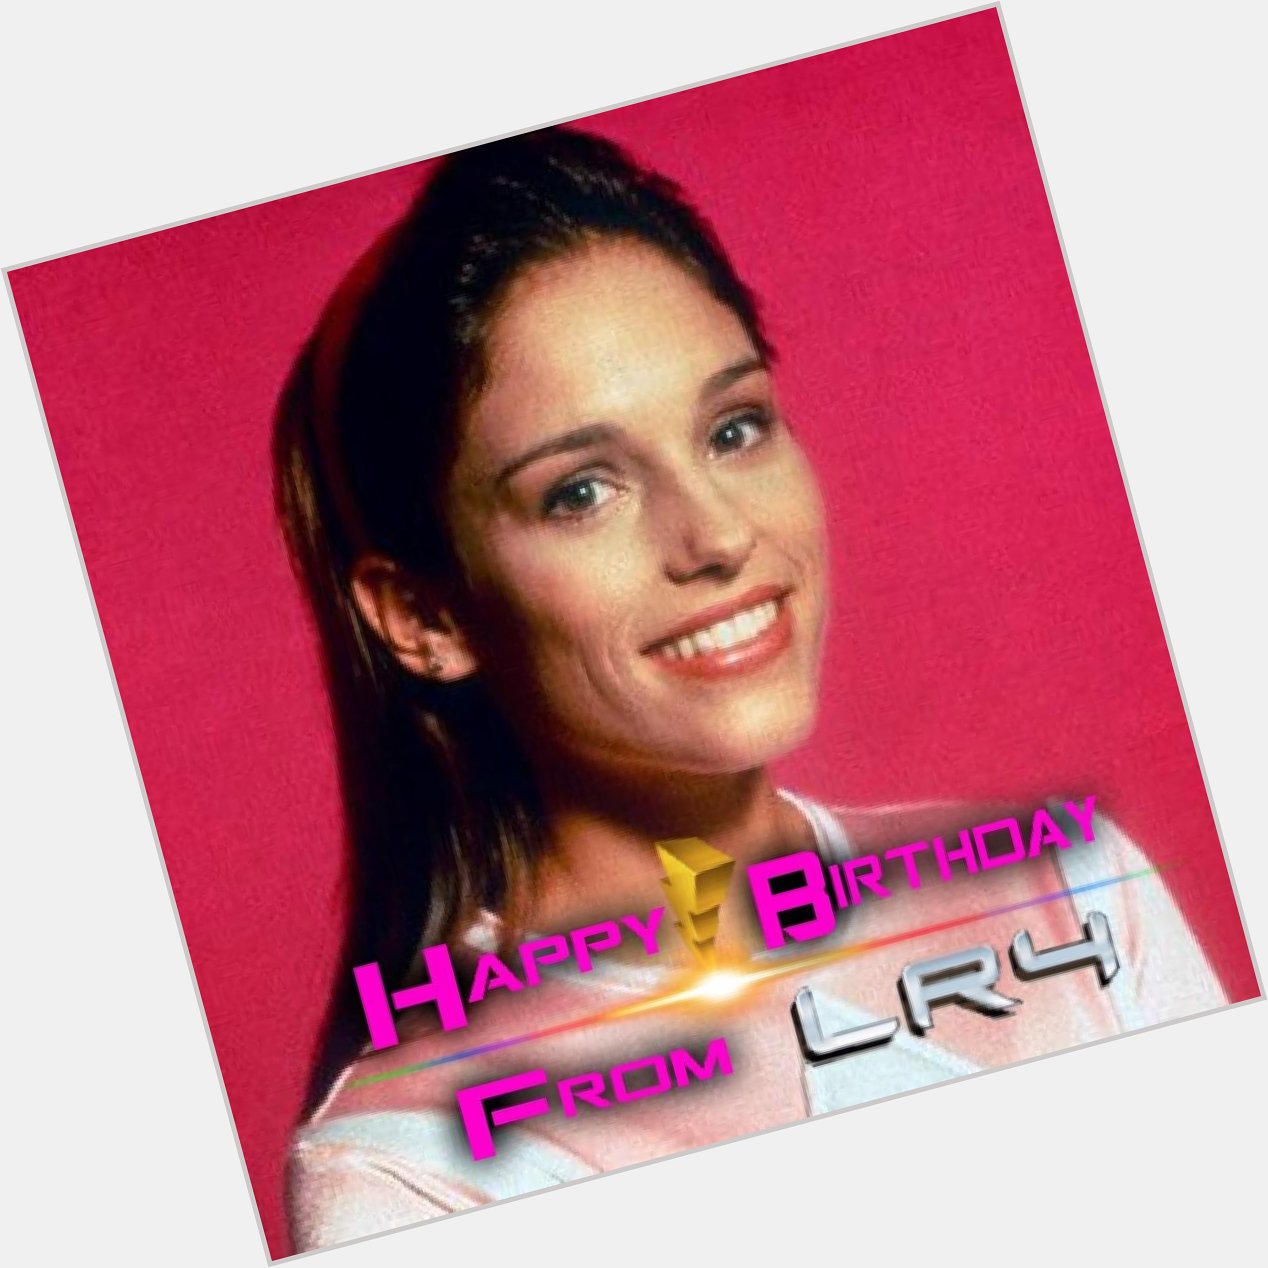 LR4 would like to wish Amy Jo Johnson a Happy Birthday! 